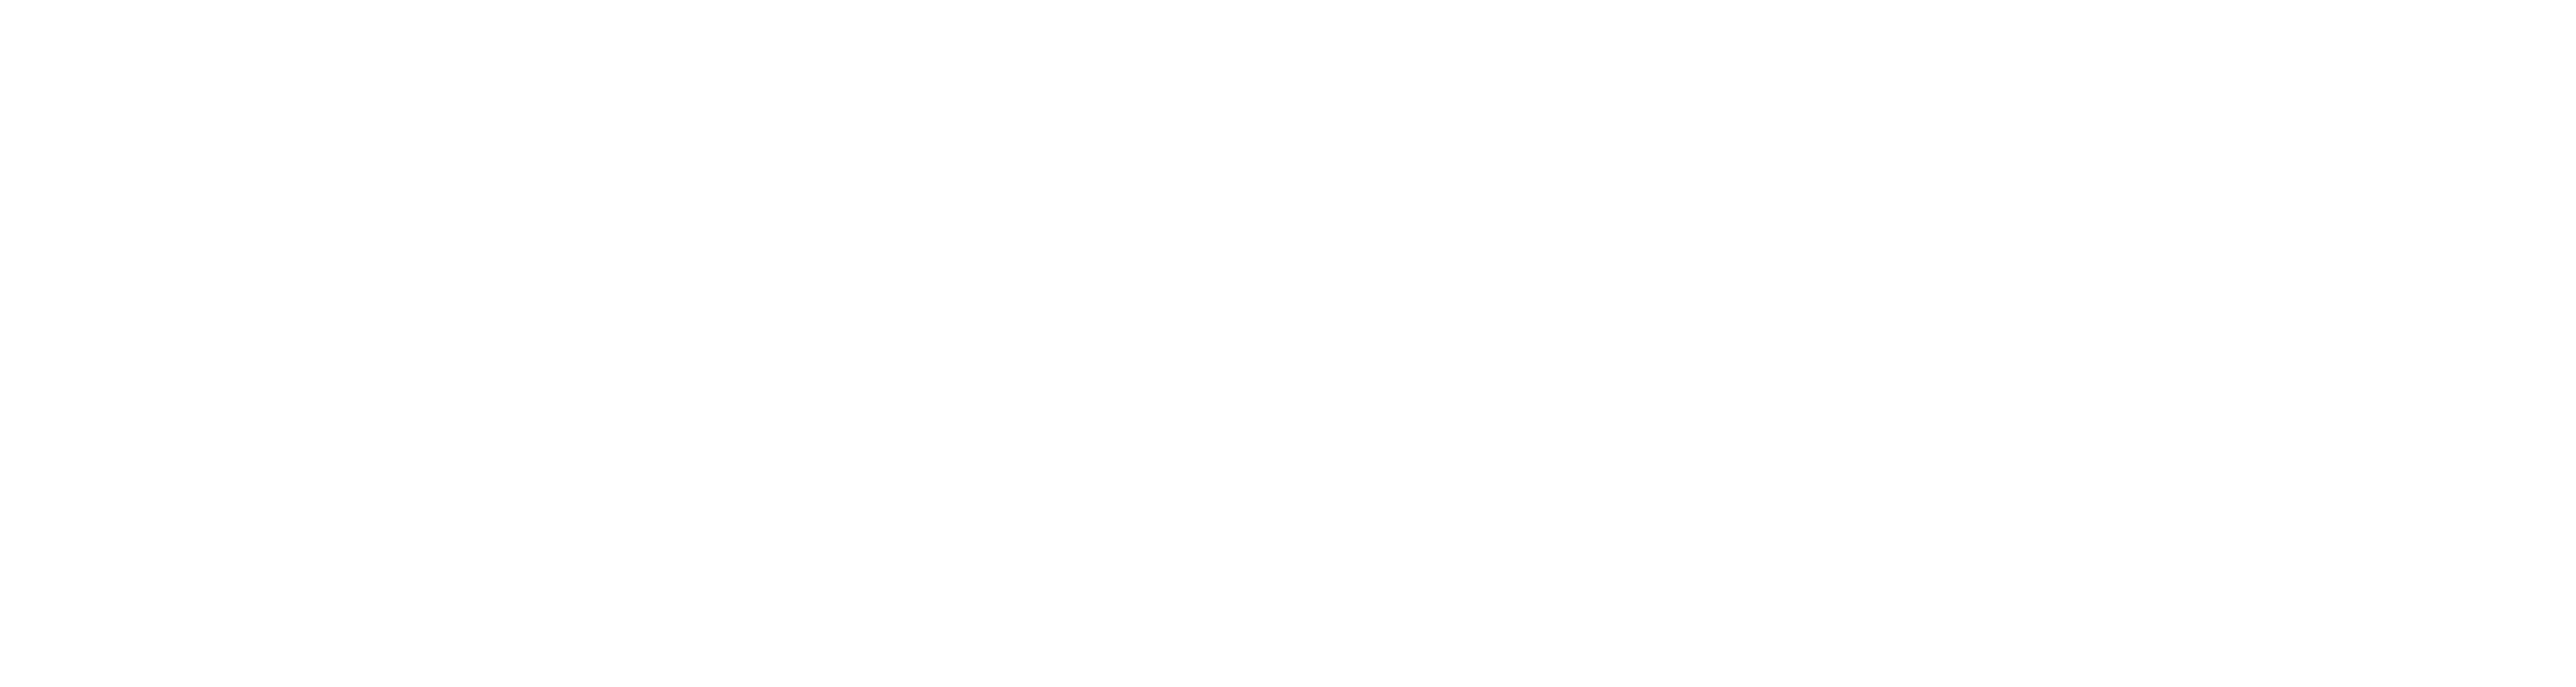 Codex lab logo inverted on white